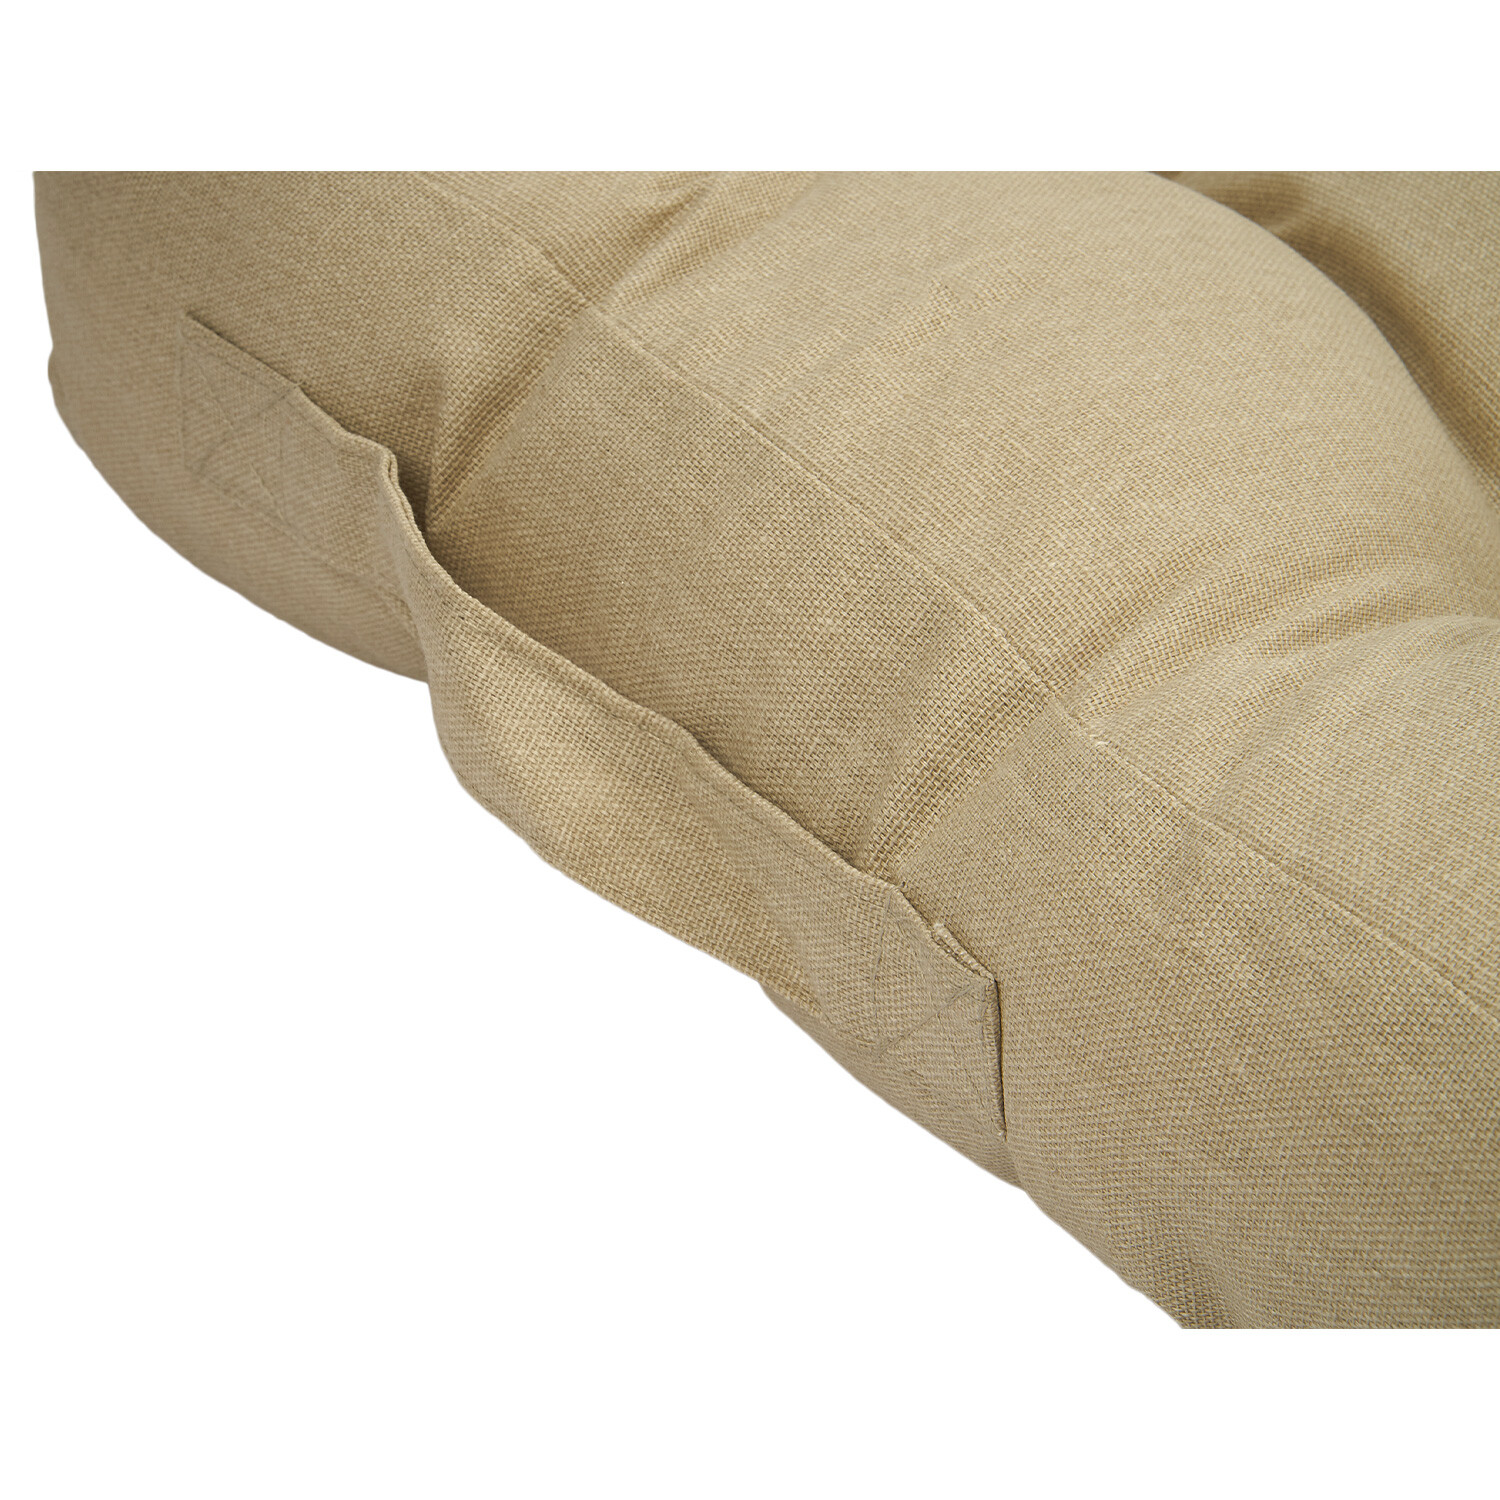 Premium Booster Cushion - Beige Image 4